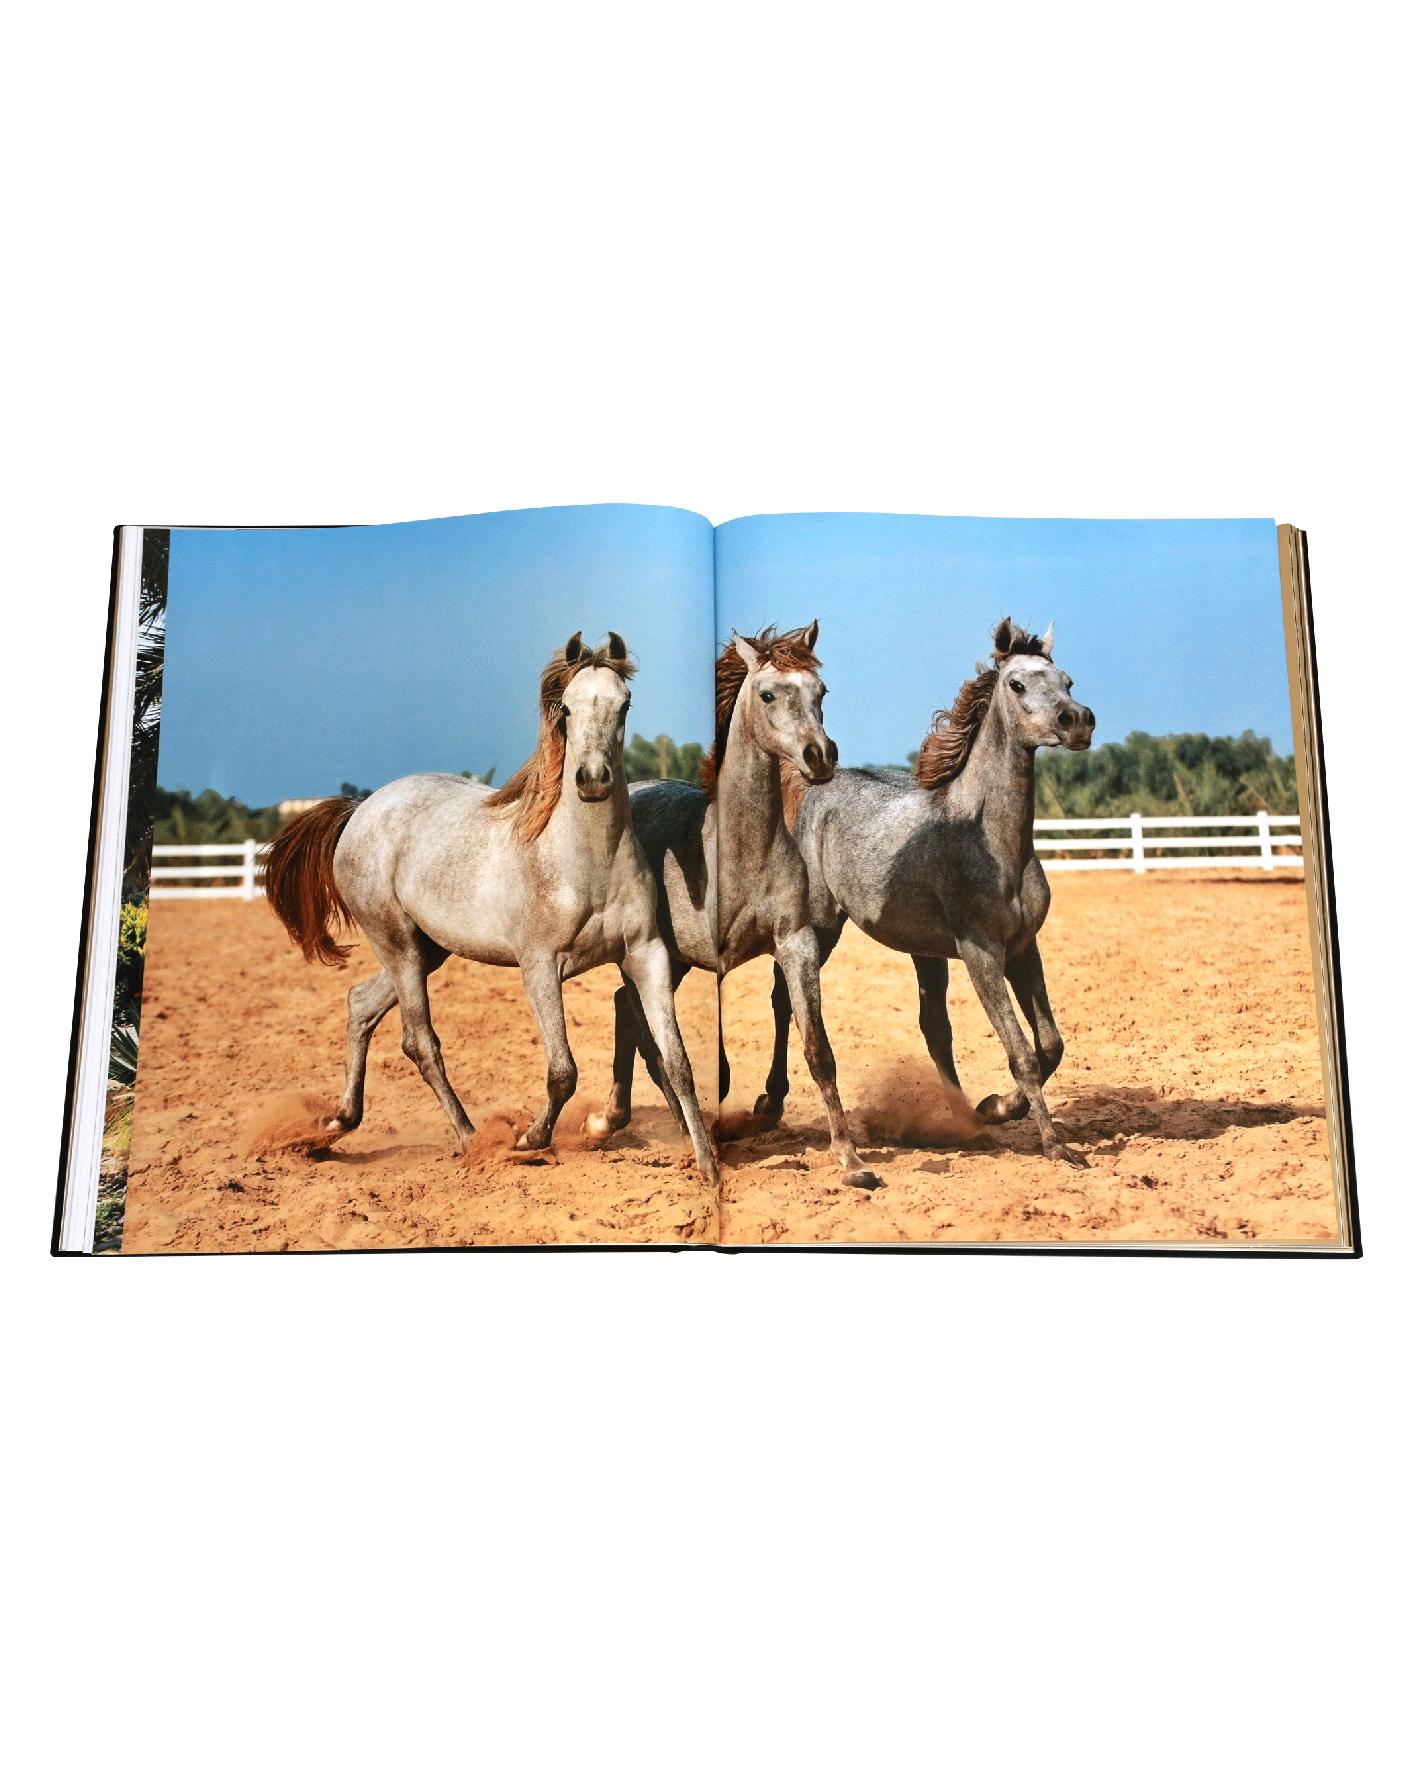 libro assouline Arabian Horses